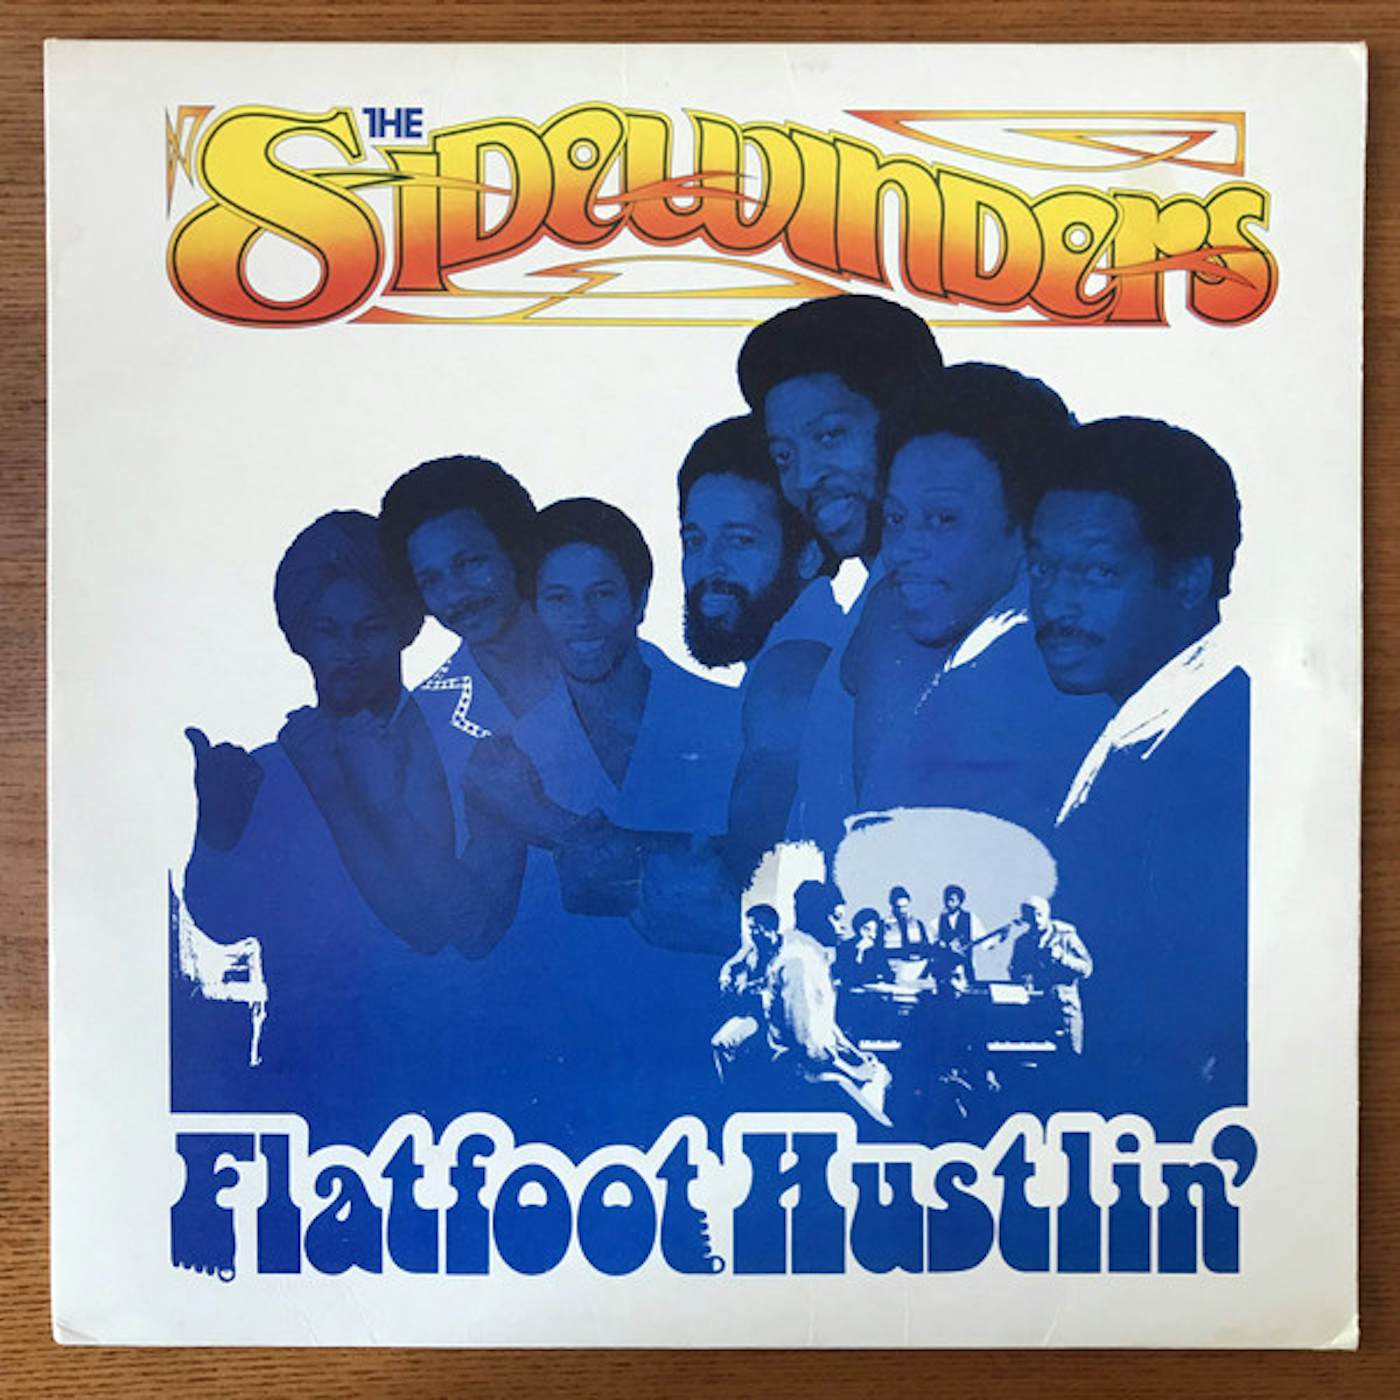 Sidewinders LIKE YOUR STUFF/FLATFOOT HUSTLIN' Vinyl Record - UK Release